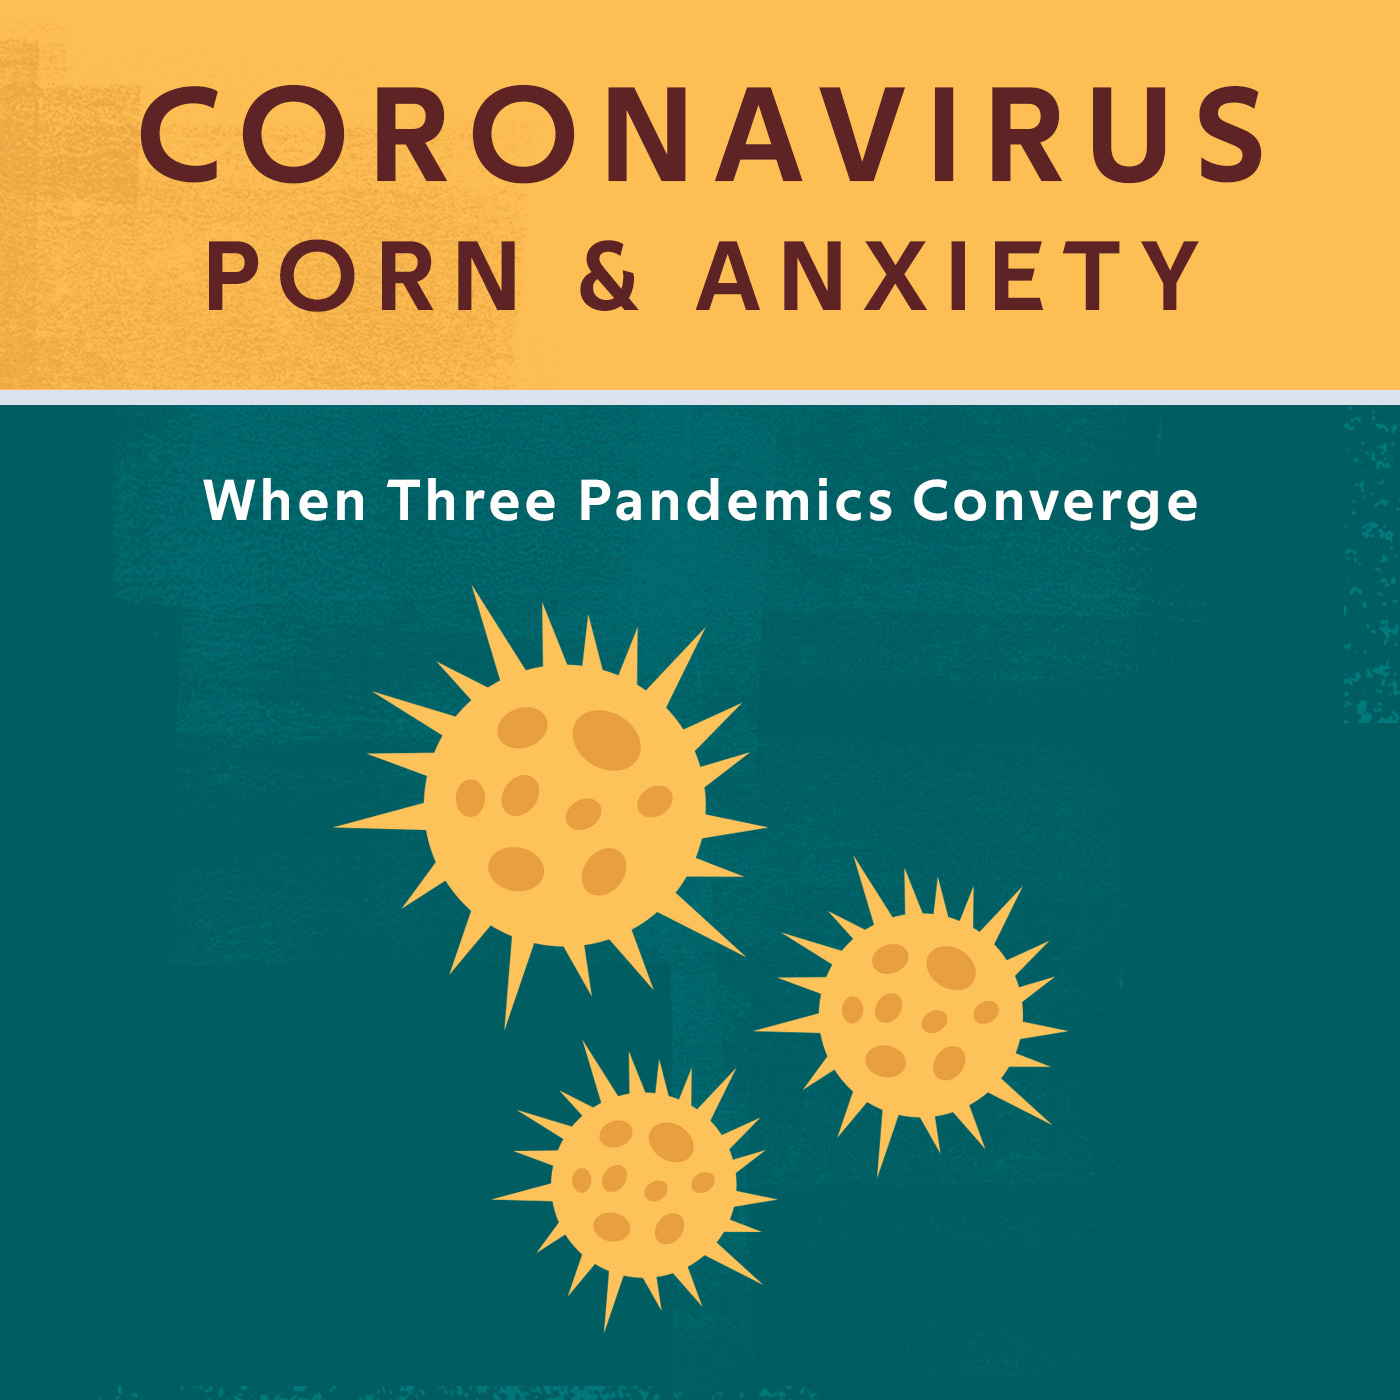 Coronavirus, Porn, and Anxiety: When Three Pandemics Converge